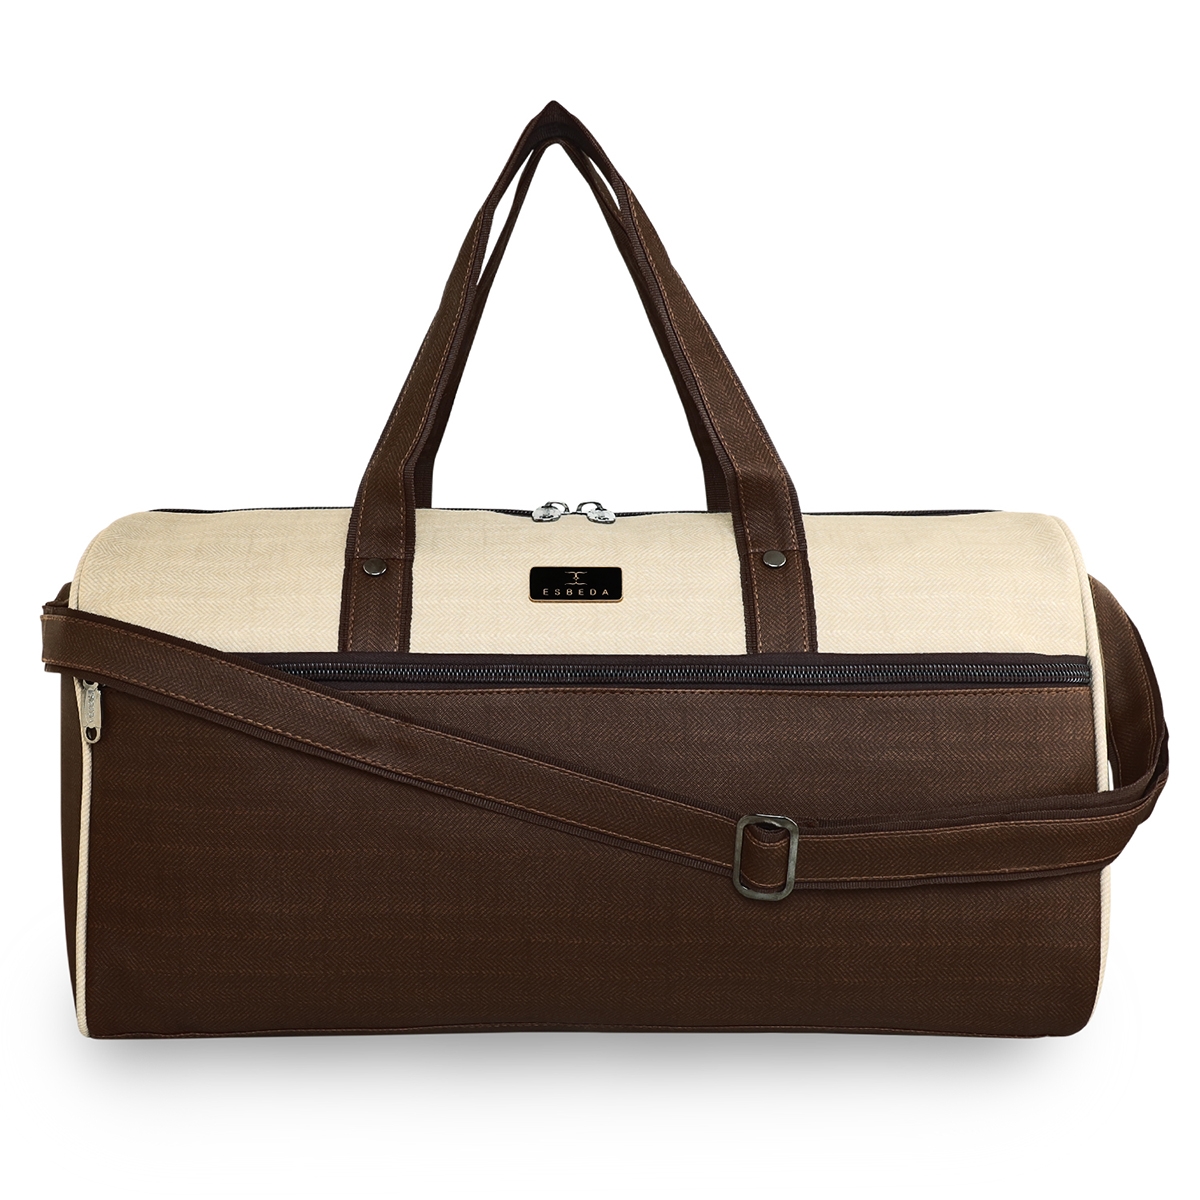 ESBEDA | ESBEDA Brown Beige Color Traveller Duffle bag For Men and Women's